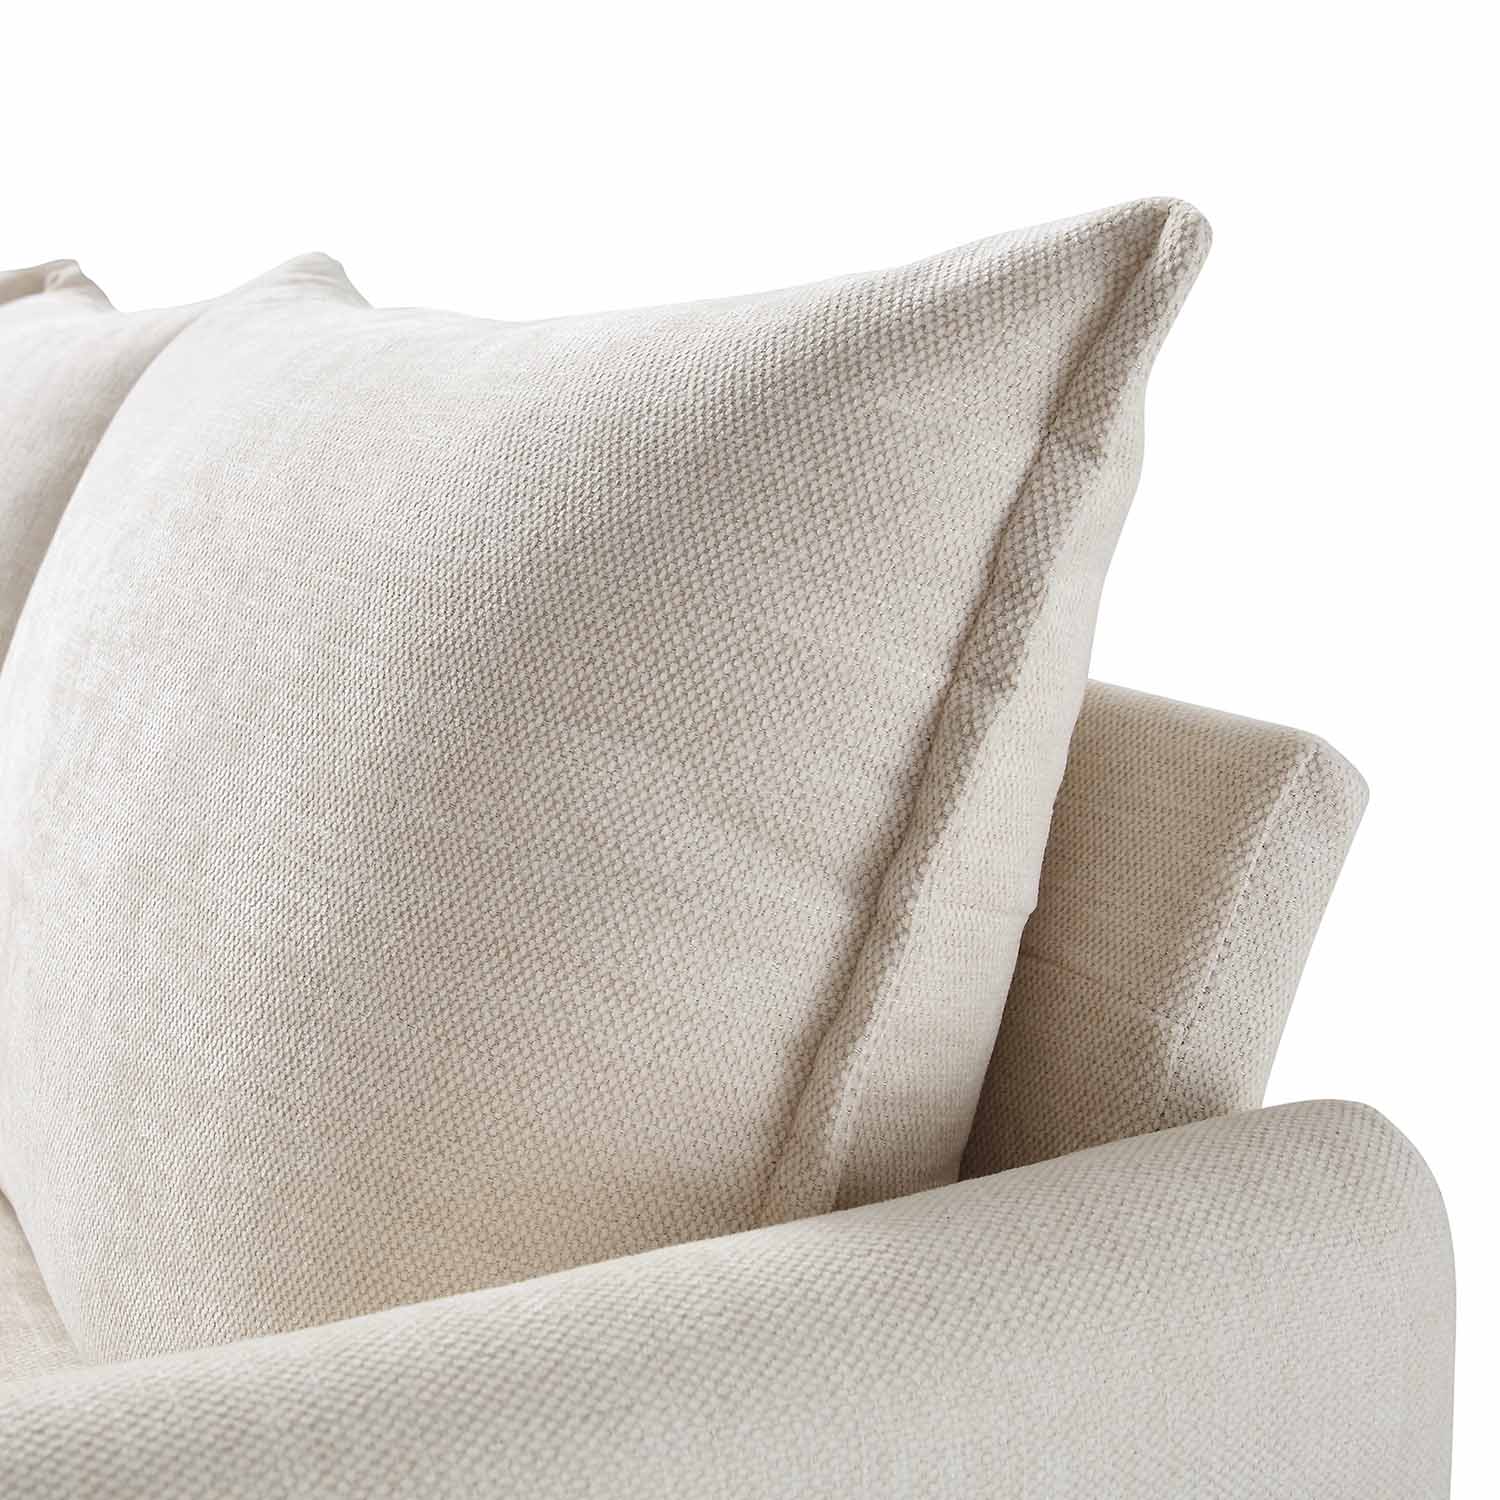 Bari Light Beige Woven Fabric Chaise Sofa